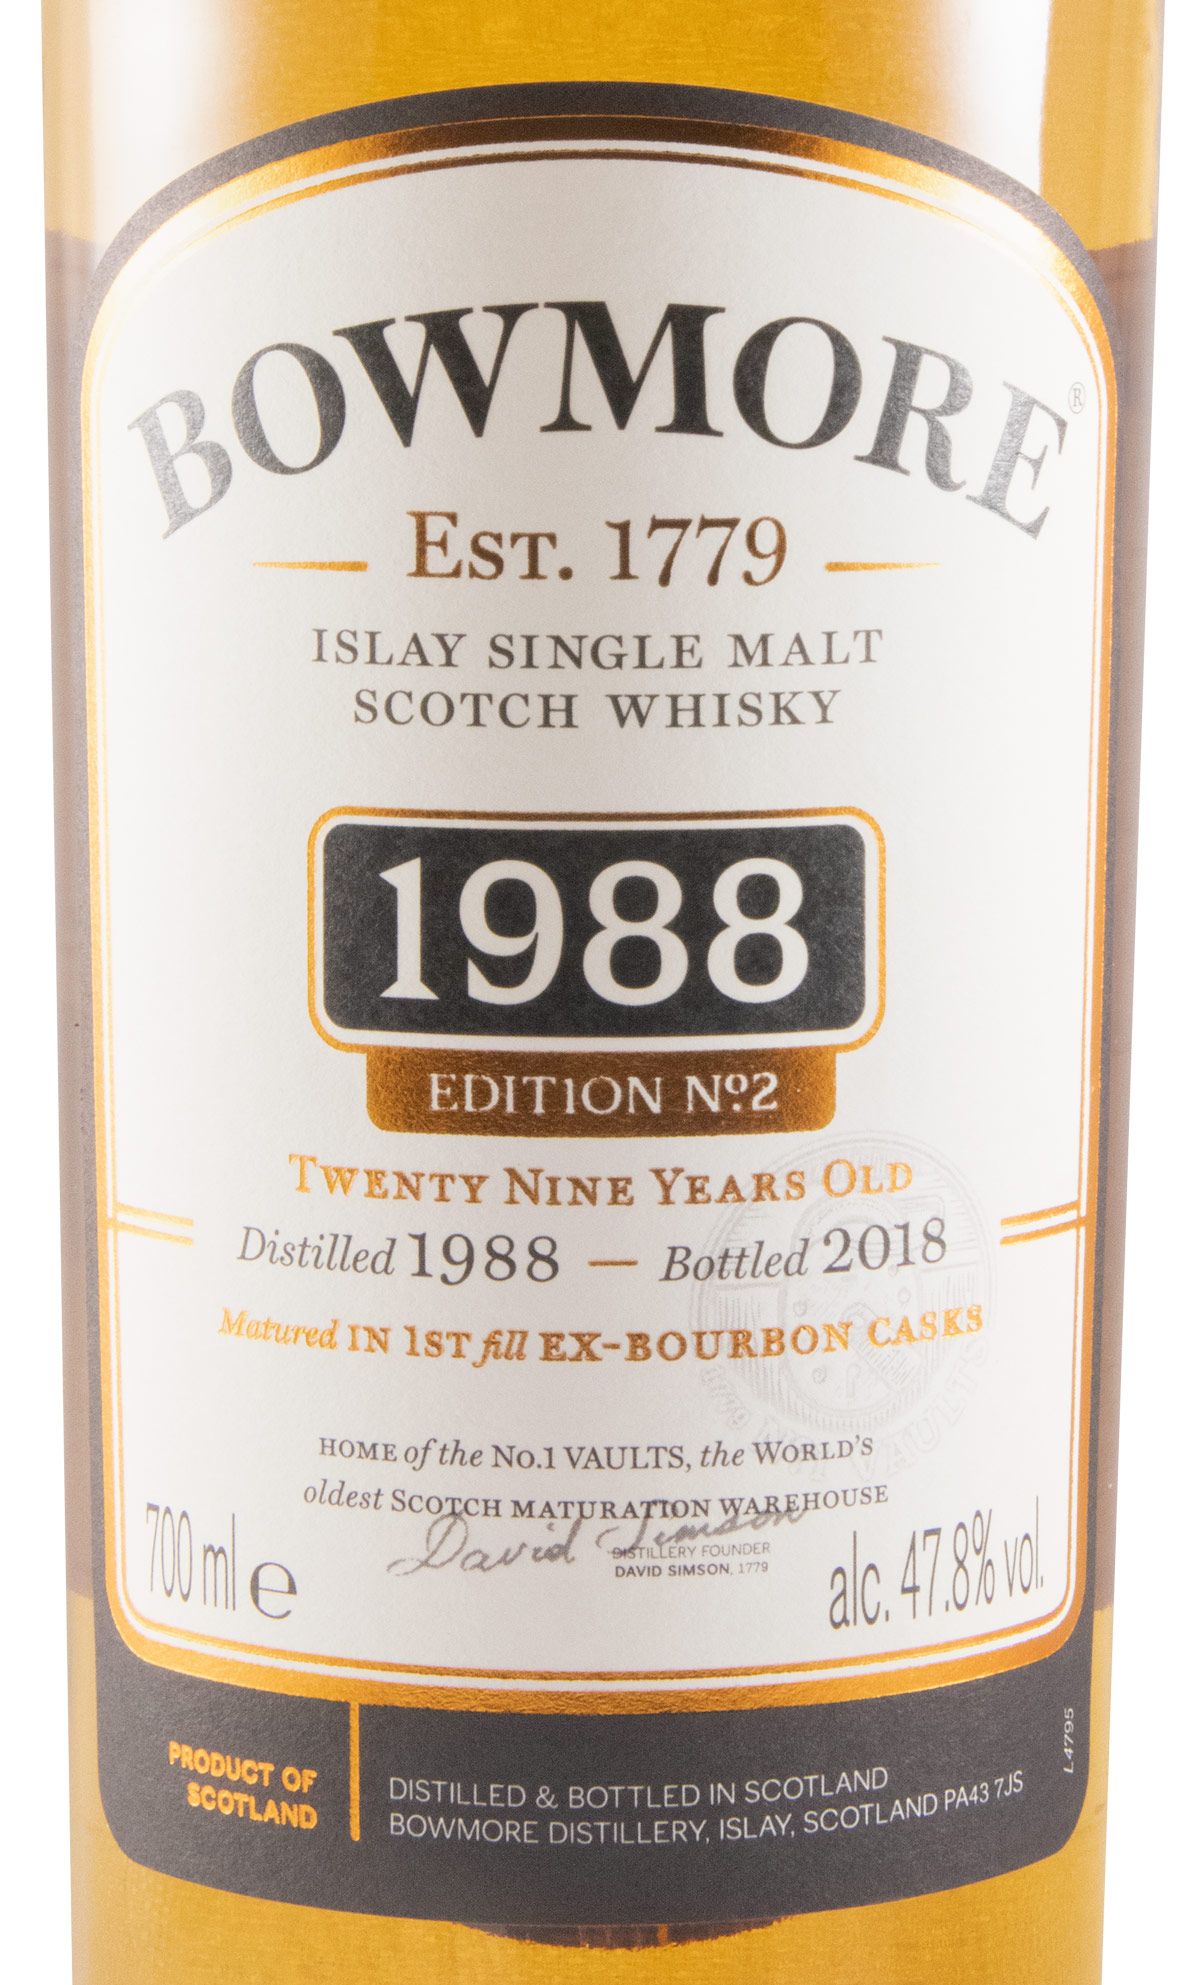 1988 Bowmore Vintage Edition N.º 2 29 anos